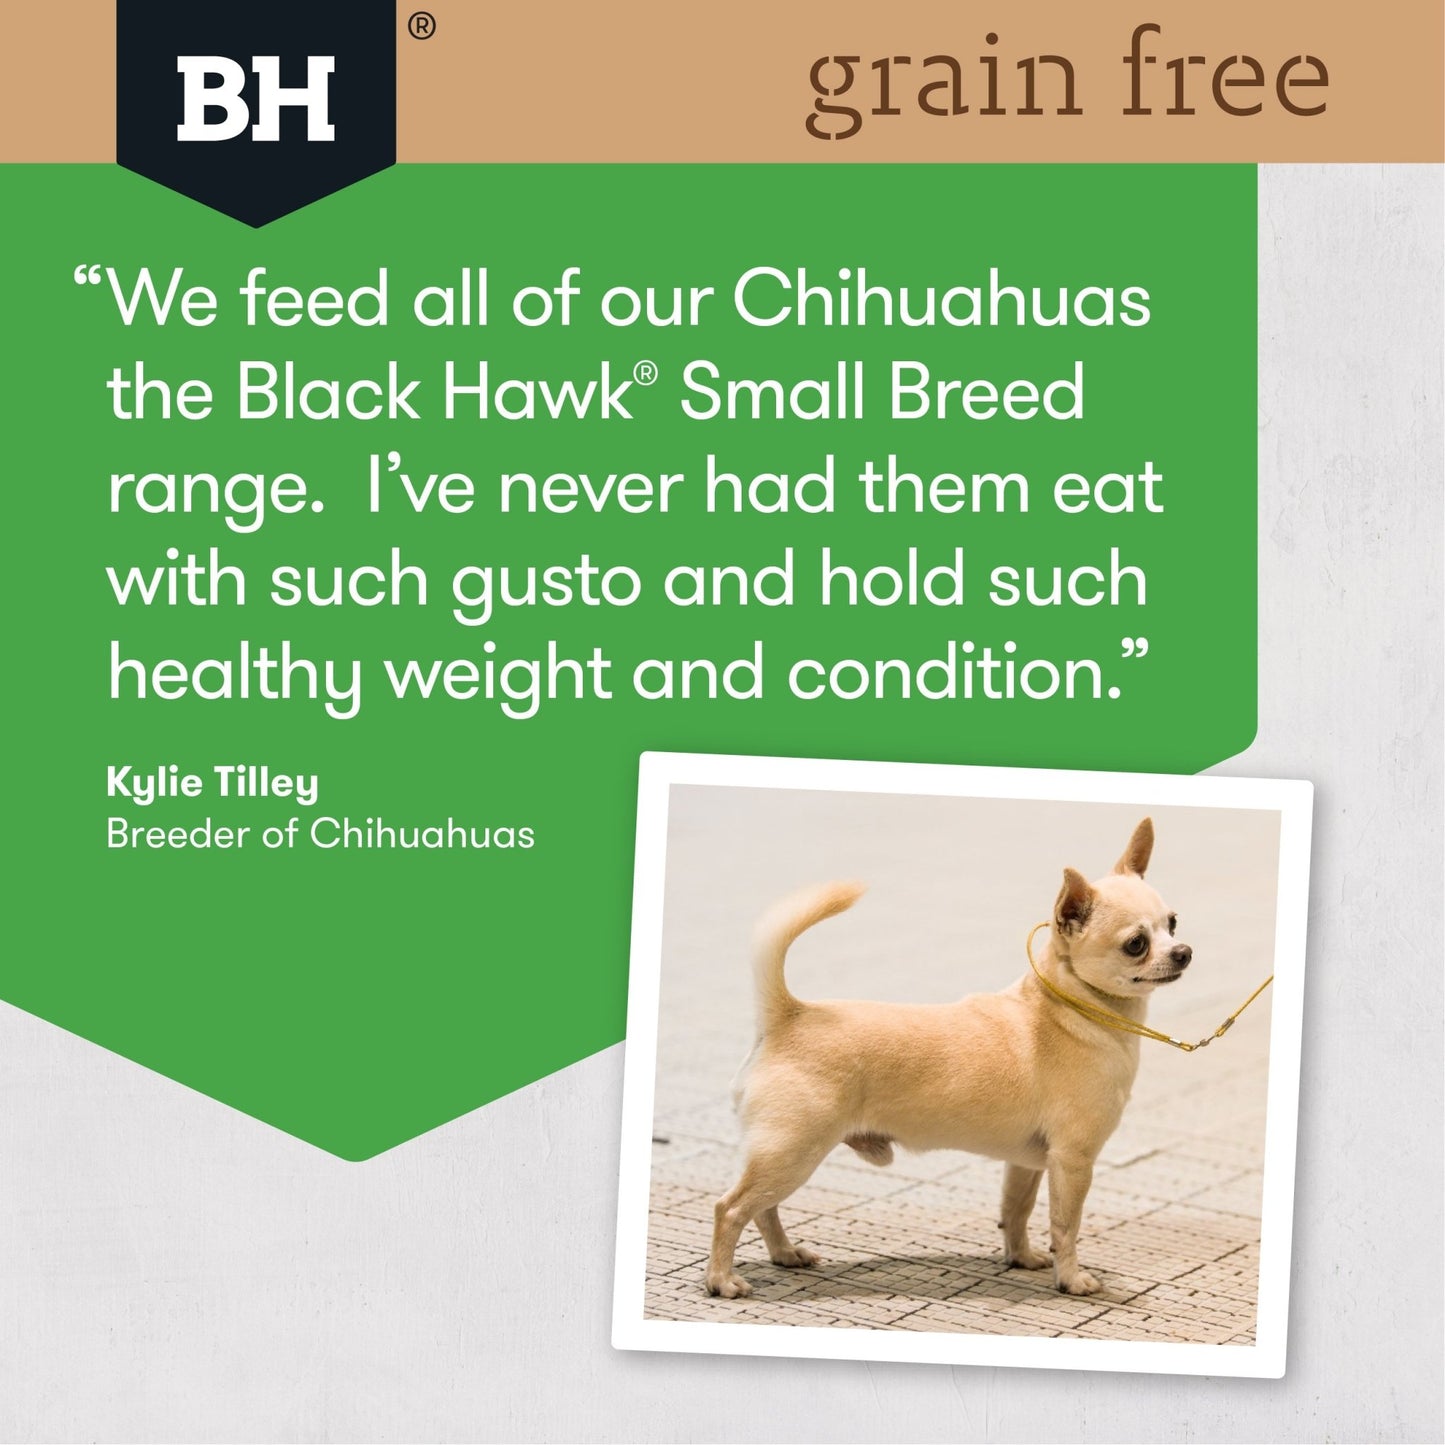 Black Hawk Grain Free Dry Dog Food Small Breed Chicken - Woonona Petfood & Produce